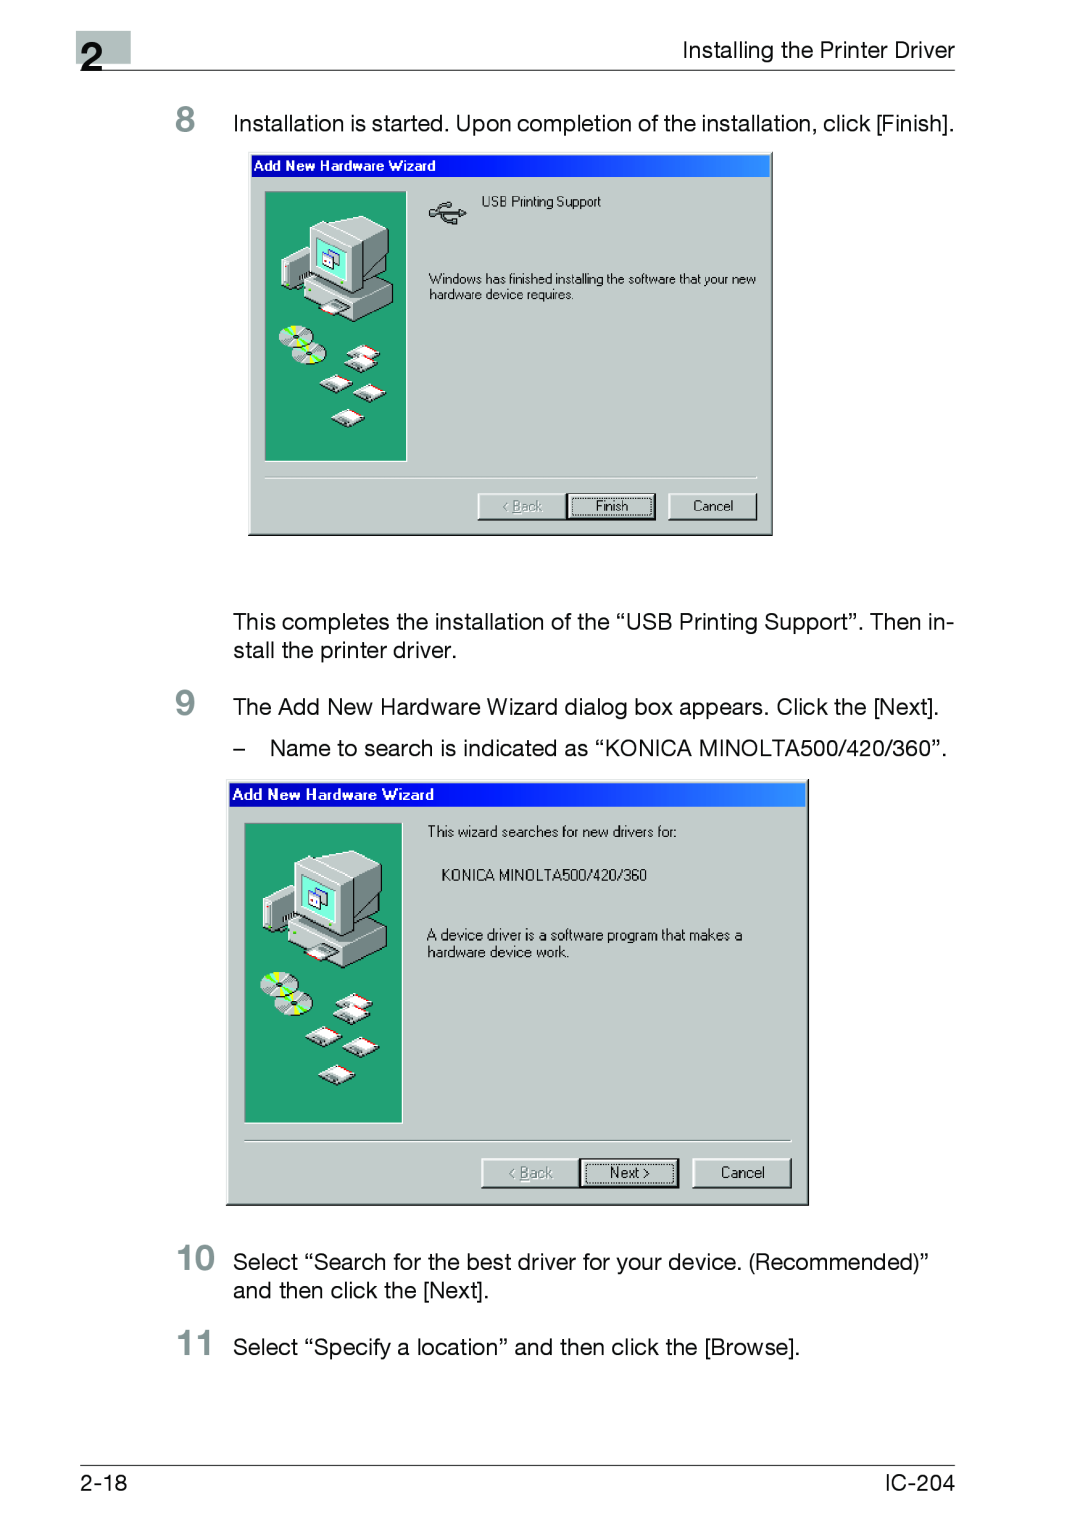 Konica Minolta IC-204 manual Installing the Printer Driver 